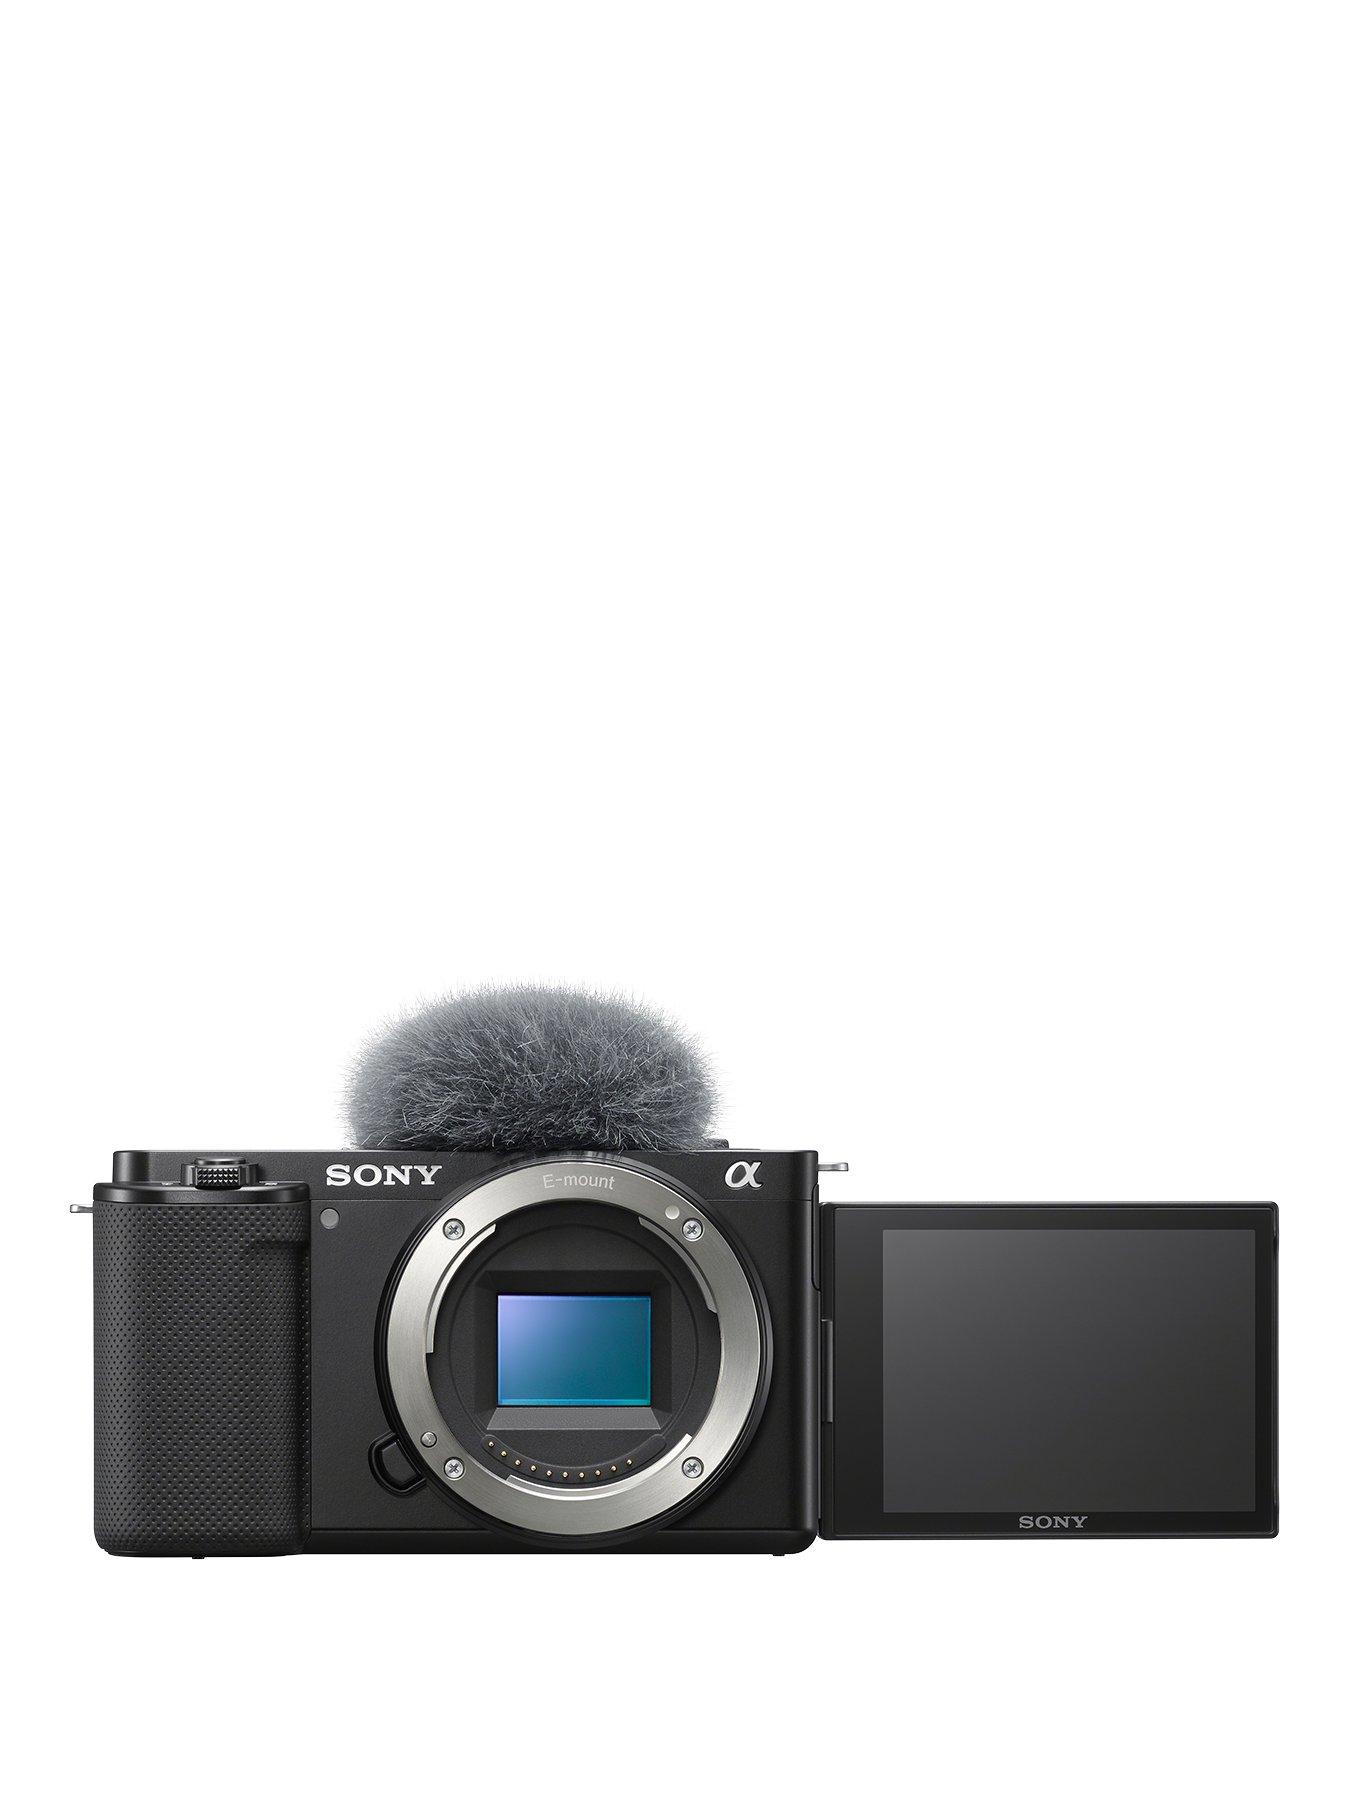 ZVE10BDI.EU Alpha ZV-E10 APS-C Mirrorless Interchangeable-Lens Vlog Camera  Body Only (Vari-Angle Screen for vlogging, 4K Video, Real-time Eye